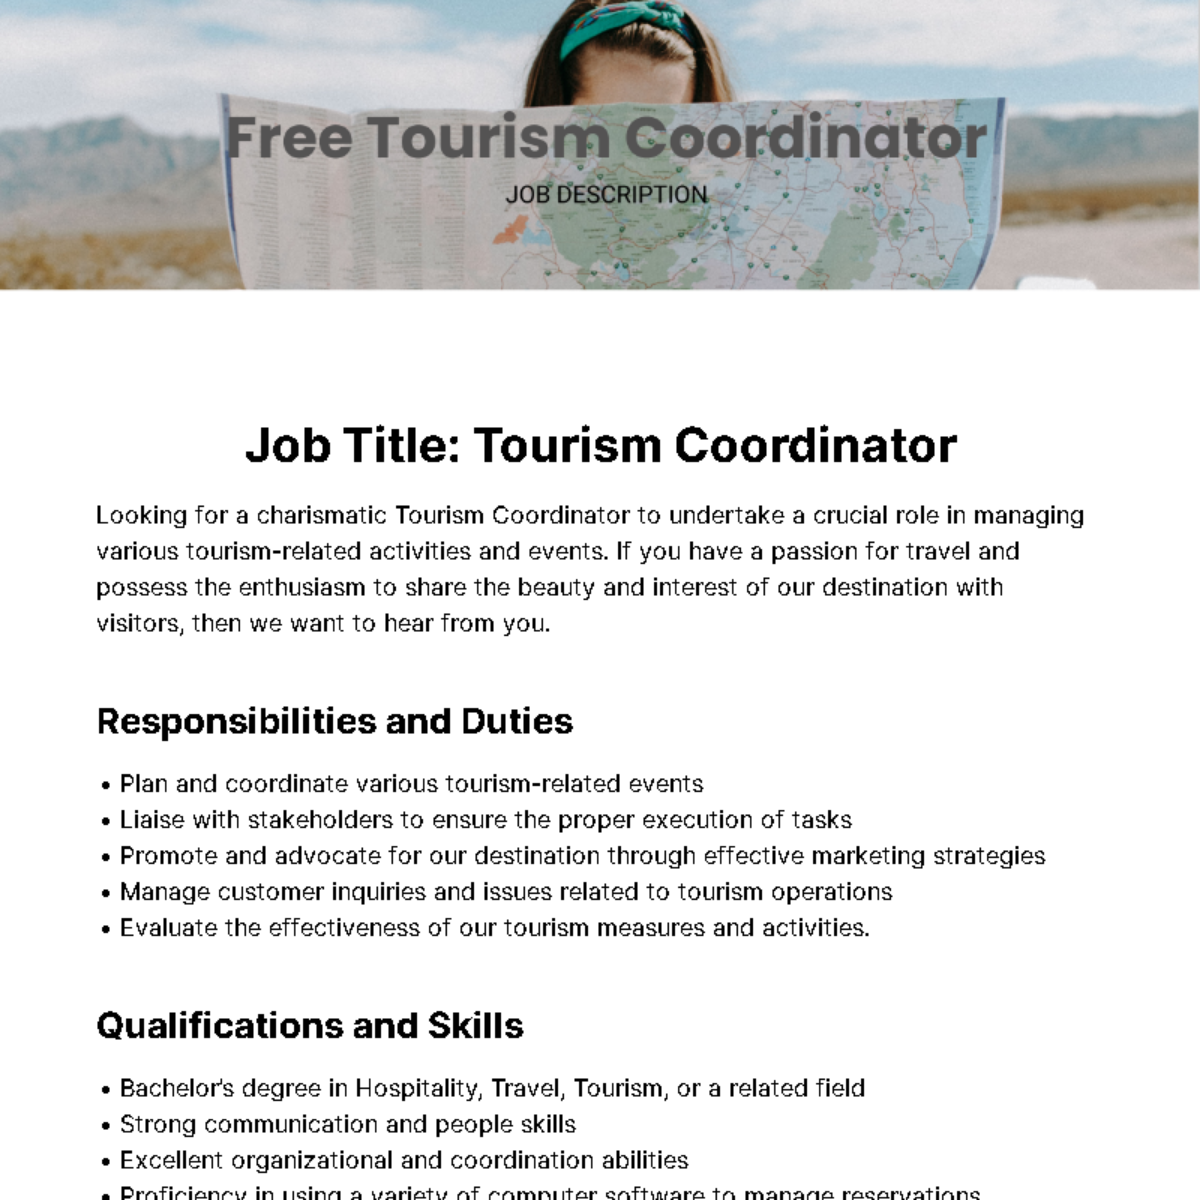 Free Tourism Coordinator Job Description Template